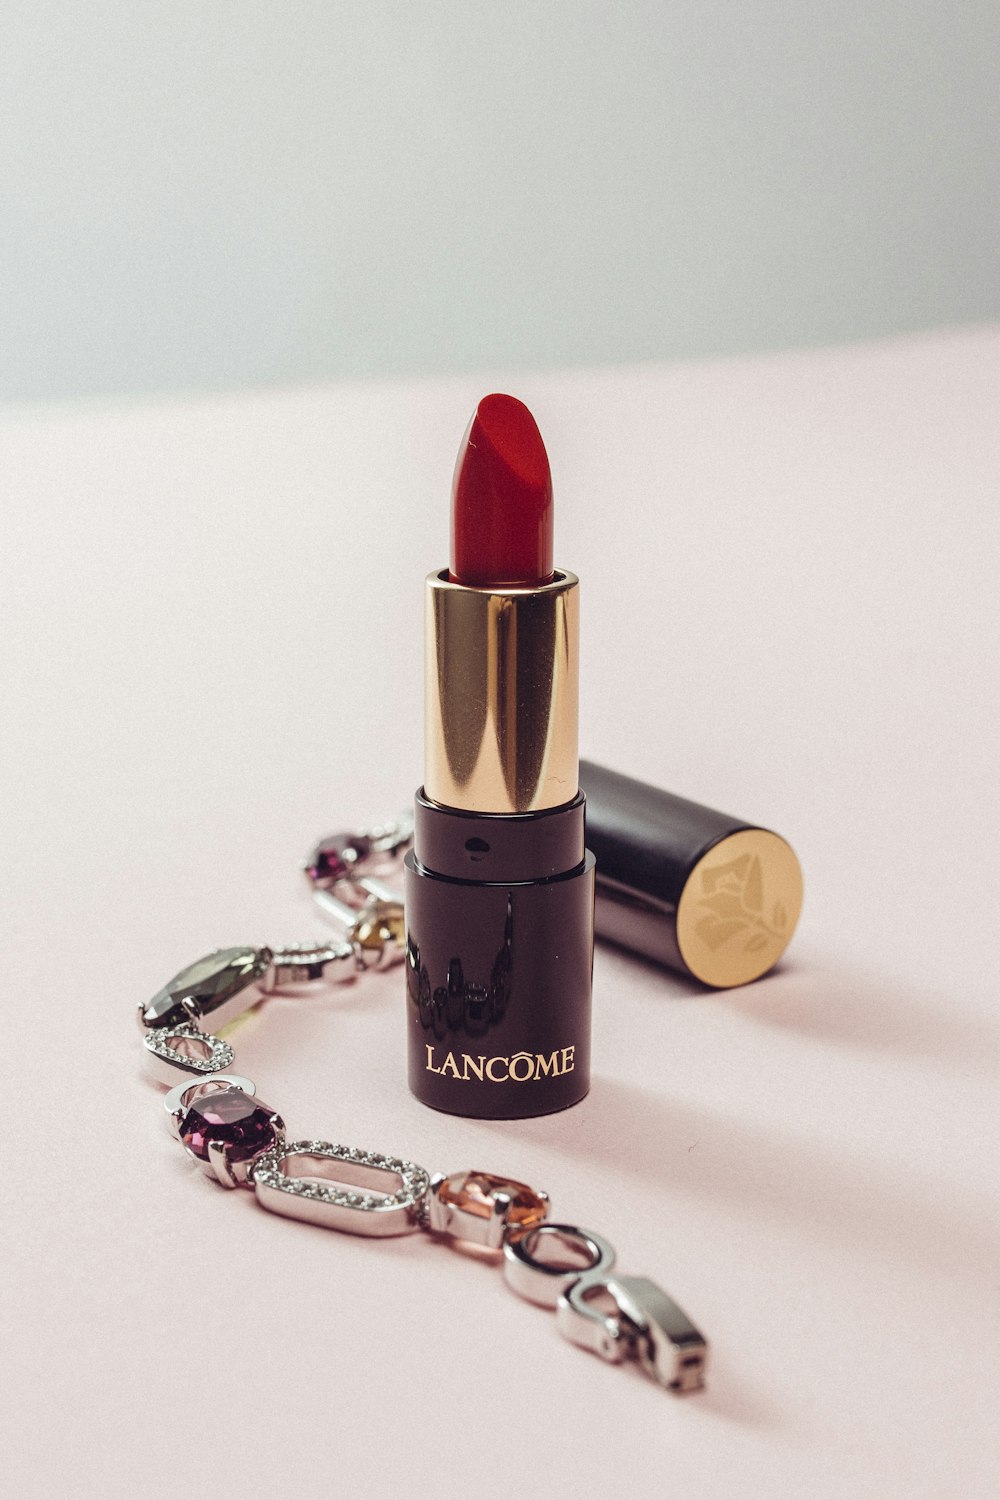 Red Lancome lipstick photo – Free Makeup Image on Unsplash